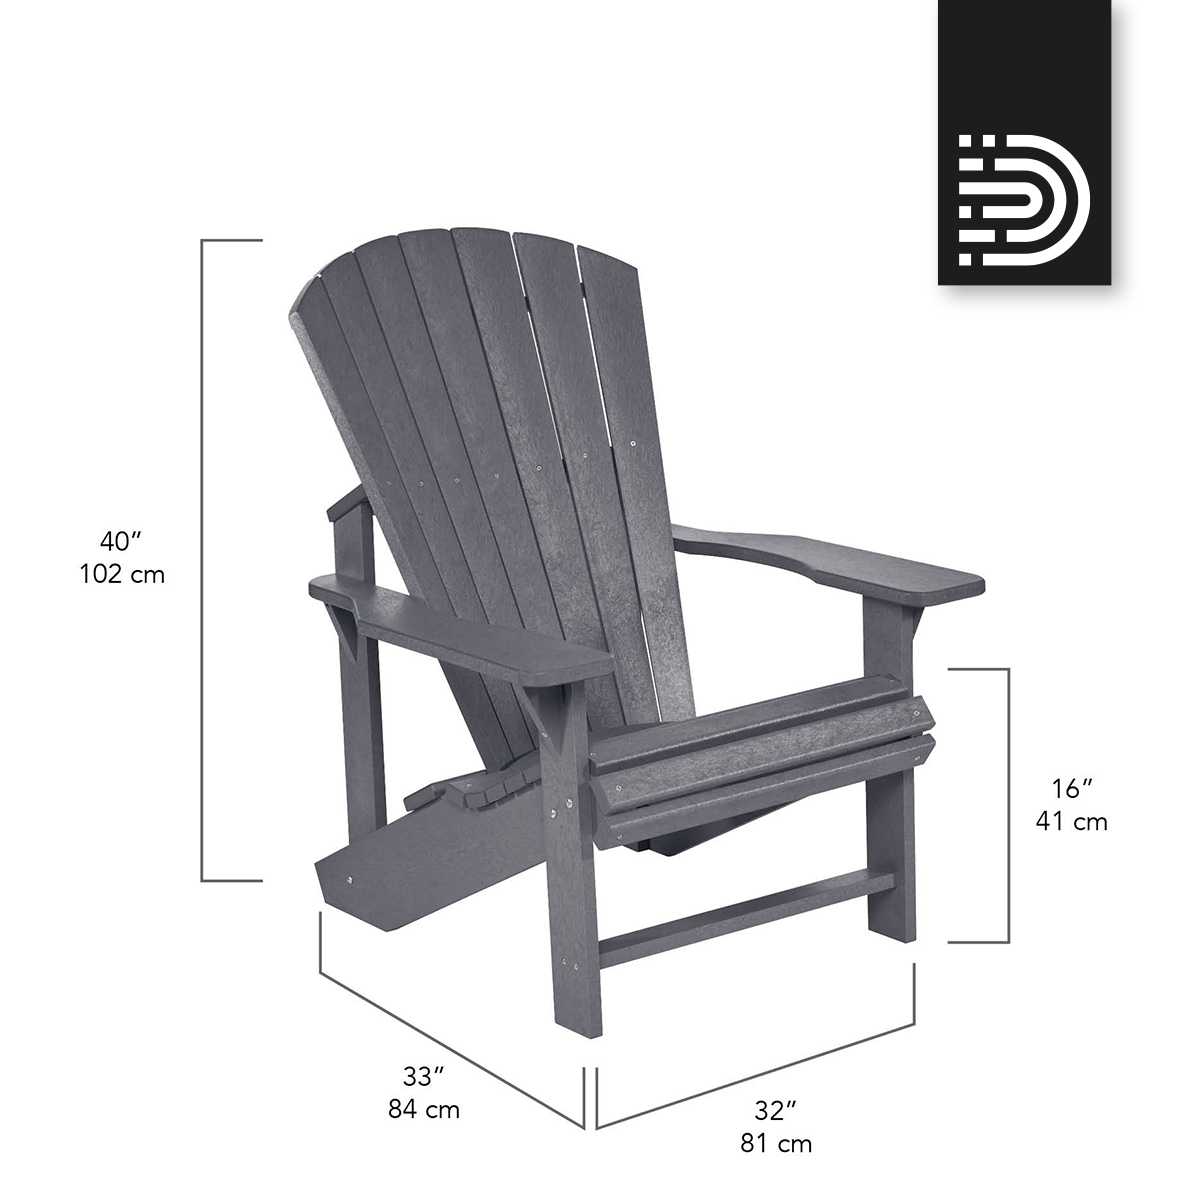  C01 Classic Adirondack Chair - slate grey 18